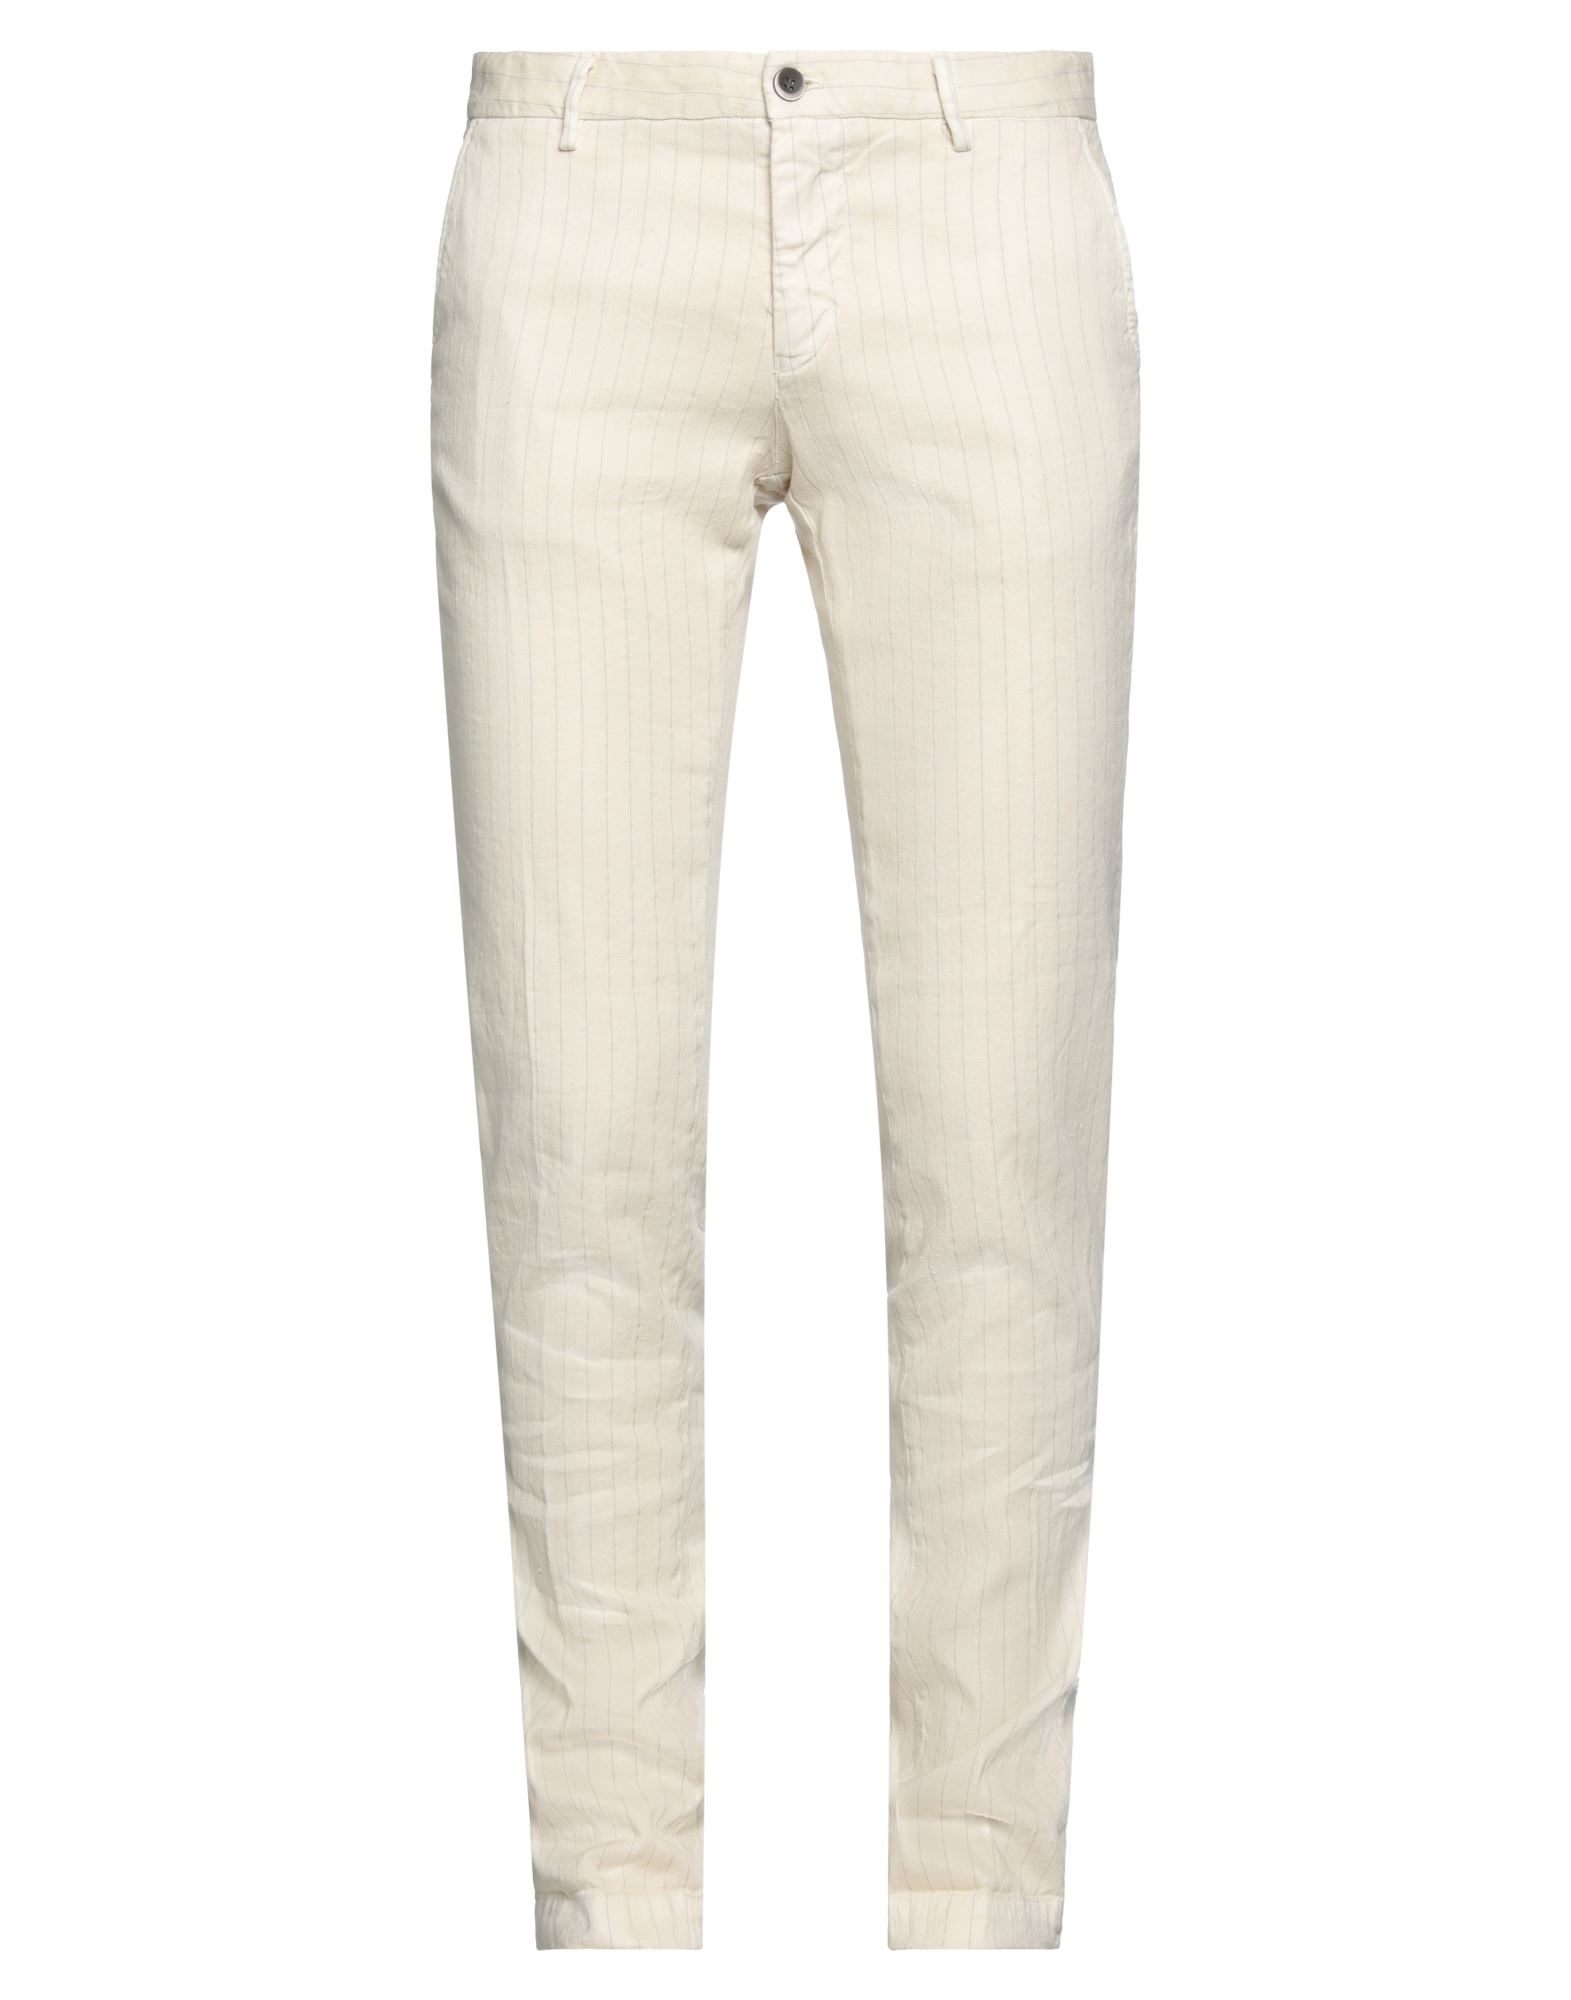 Mason's Man Pants Beige Size 30 Linen, Cotton, Polyester, Elastane